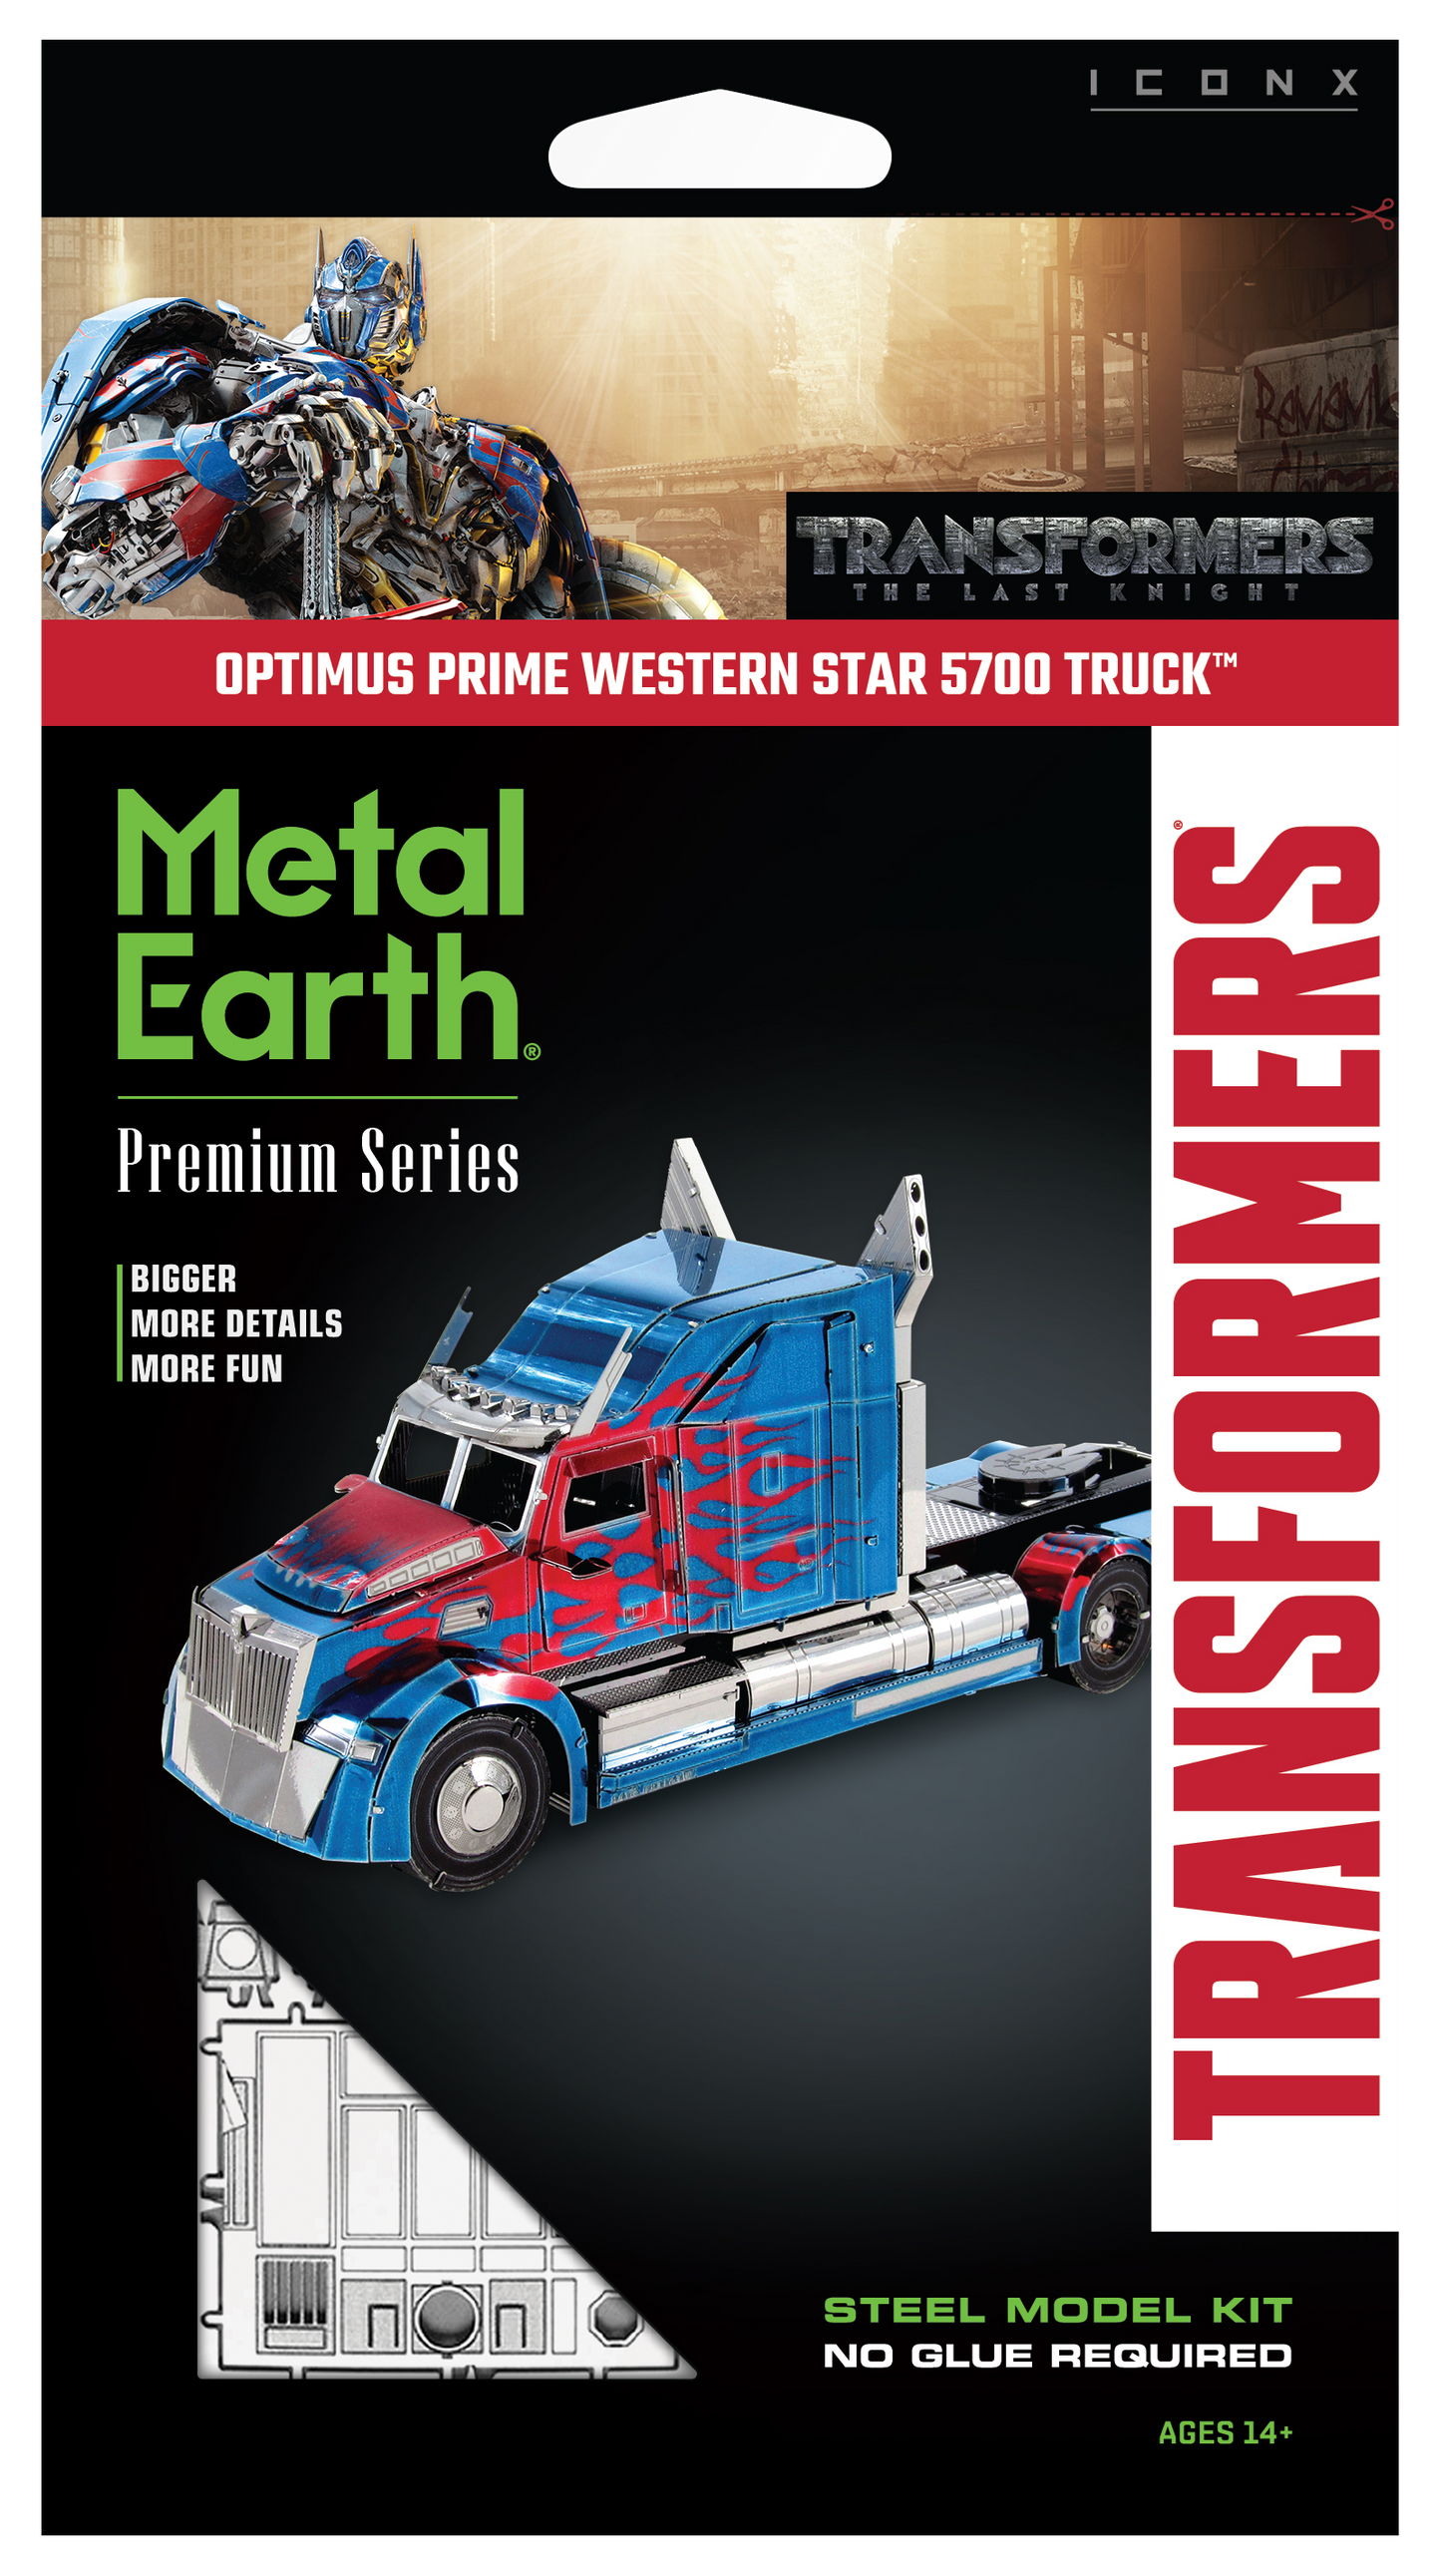 Metal Earth Premium Series - Transformers - Optimus Prime Western Star 5700 Truck